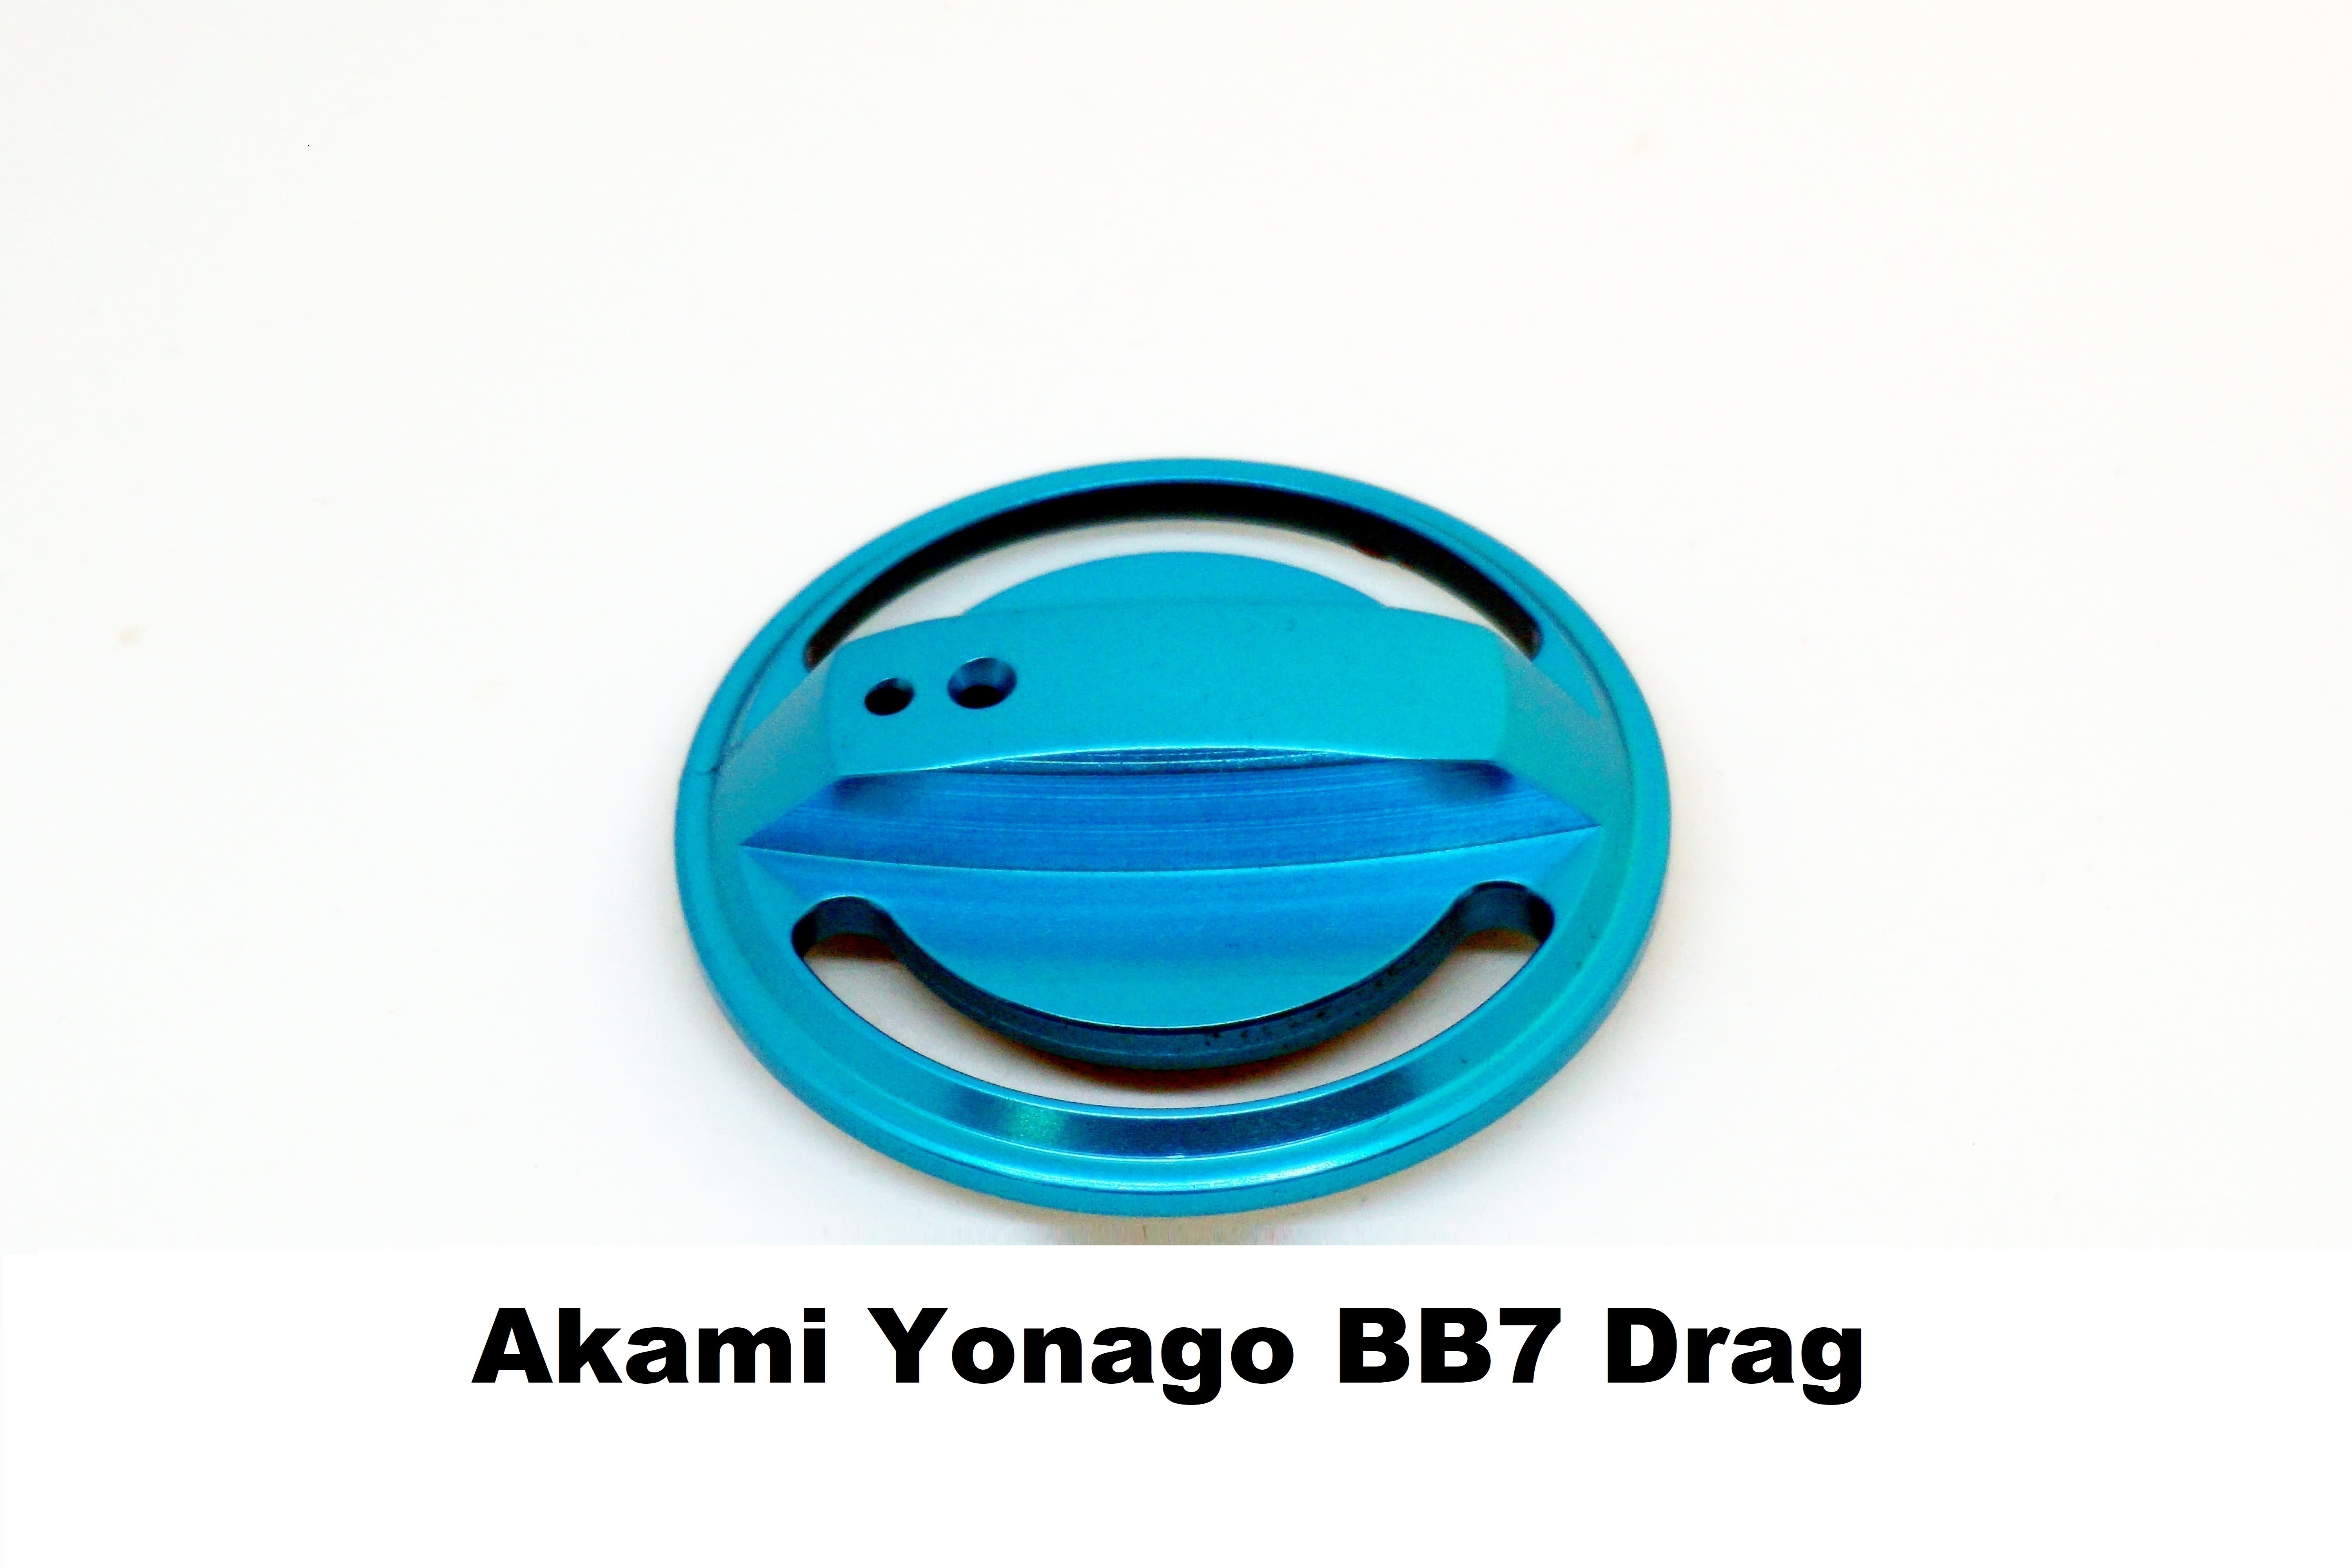 Drag Knob for Akami Yonago BB7 Drag